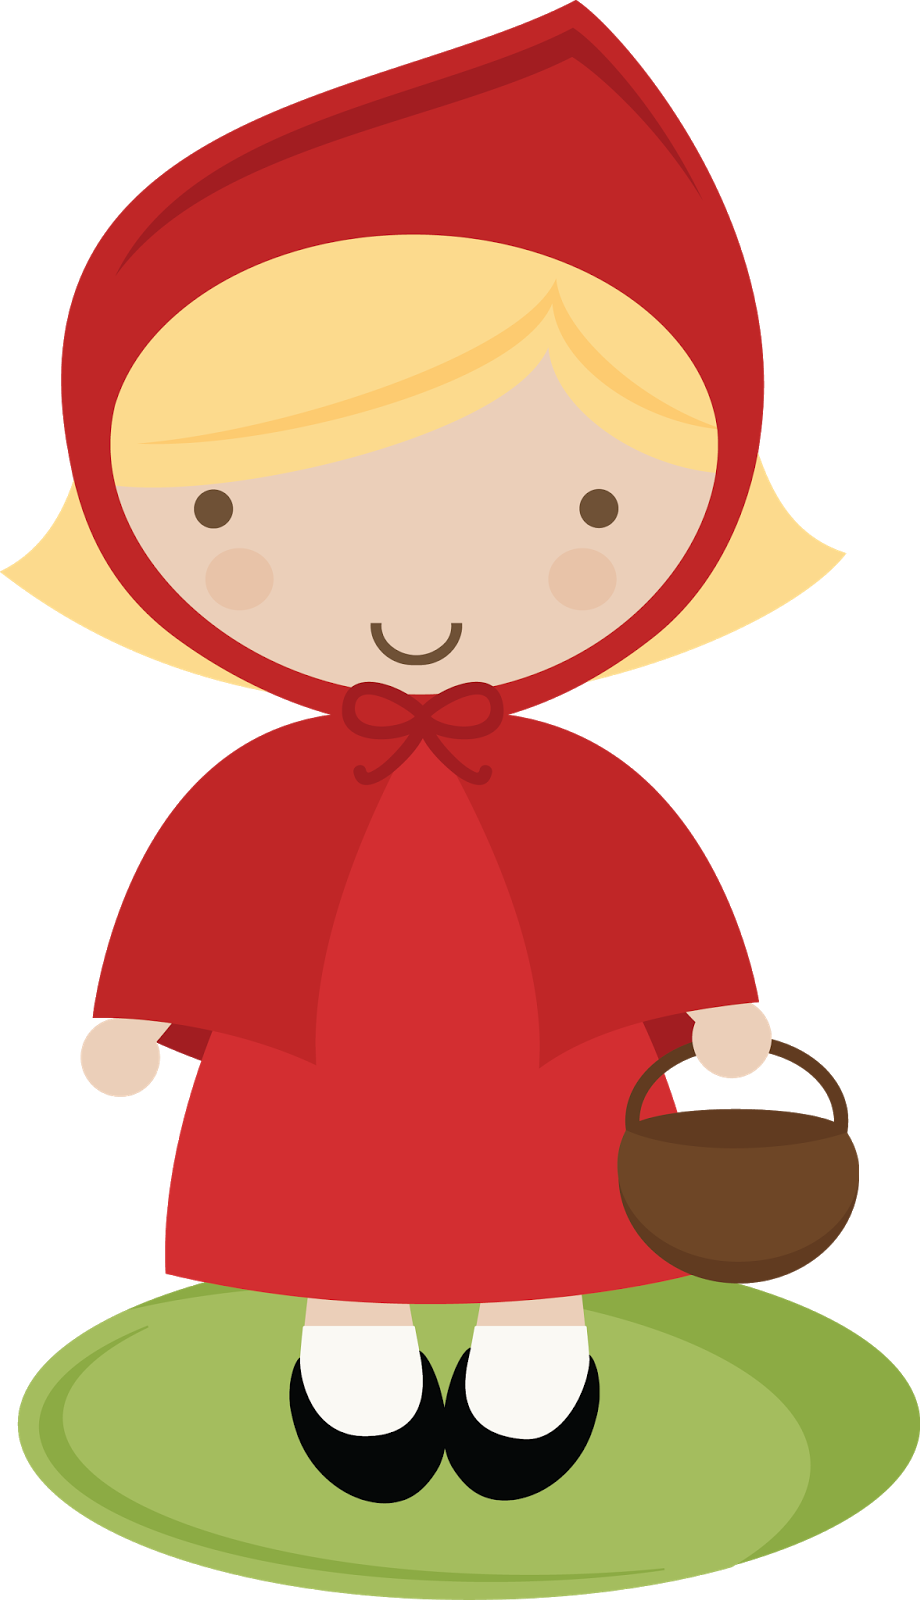 Little Red Riding Hood Template.